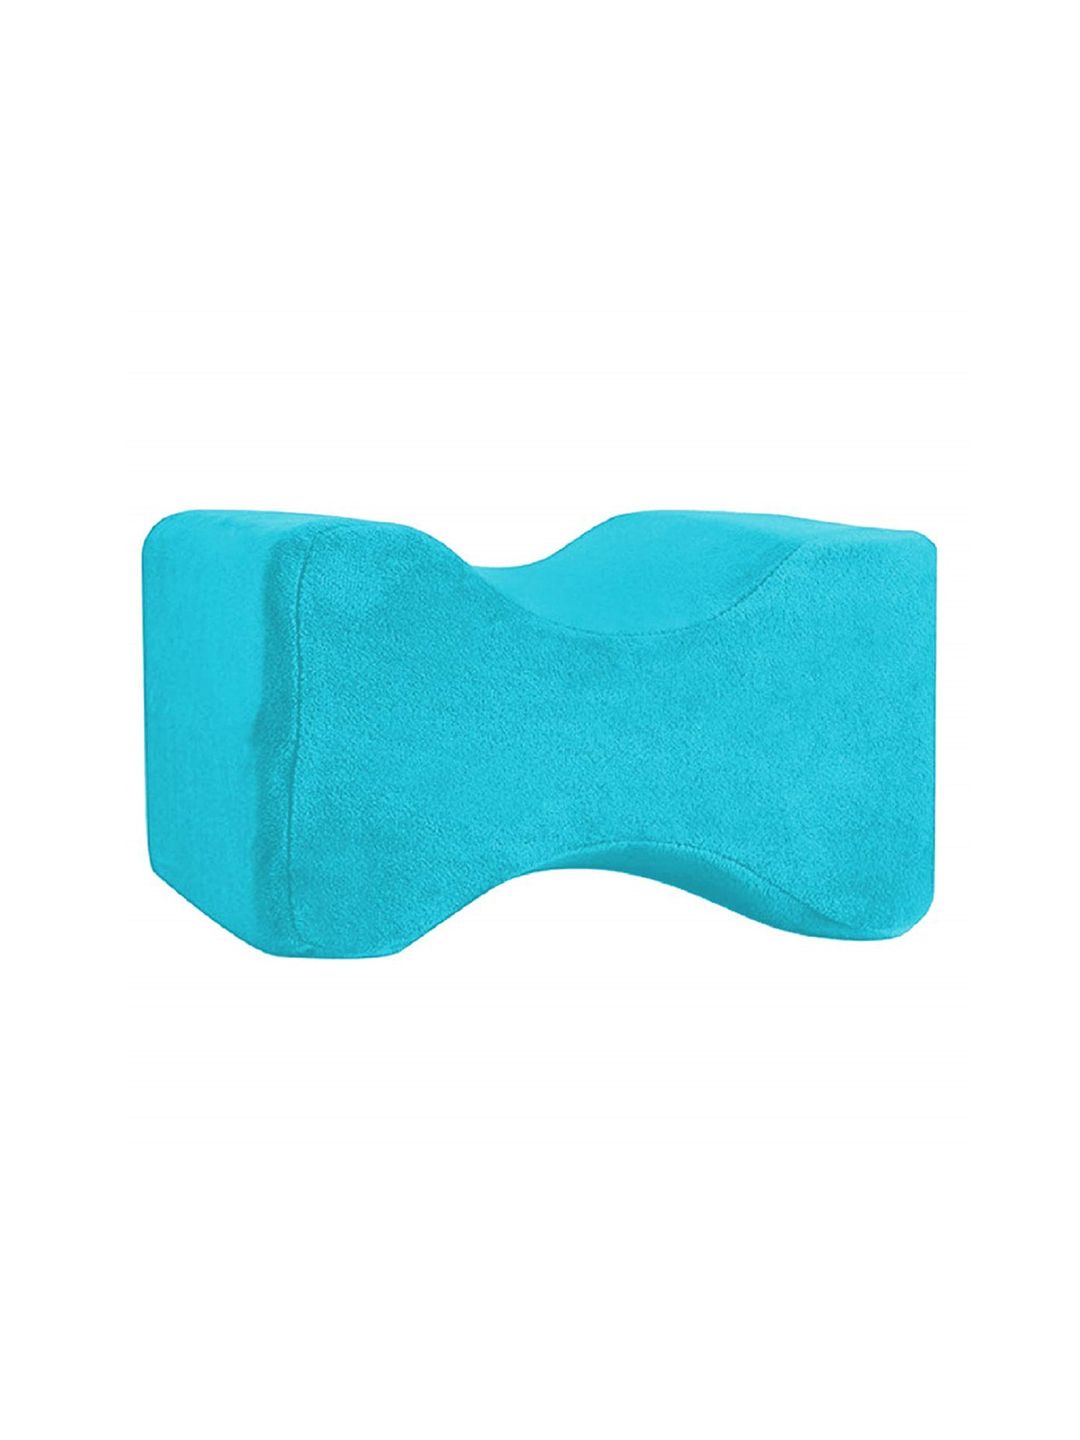 Pum Pum Turquoise Blue Memory Foam Orthopedic Knee Support Leg Rest Pillows Price in India